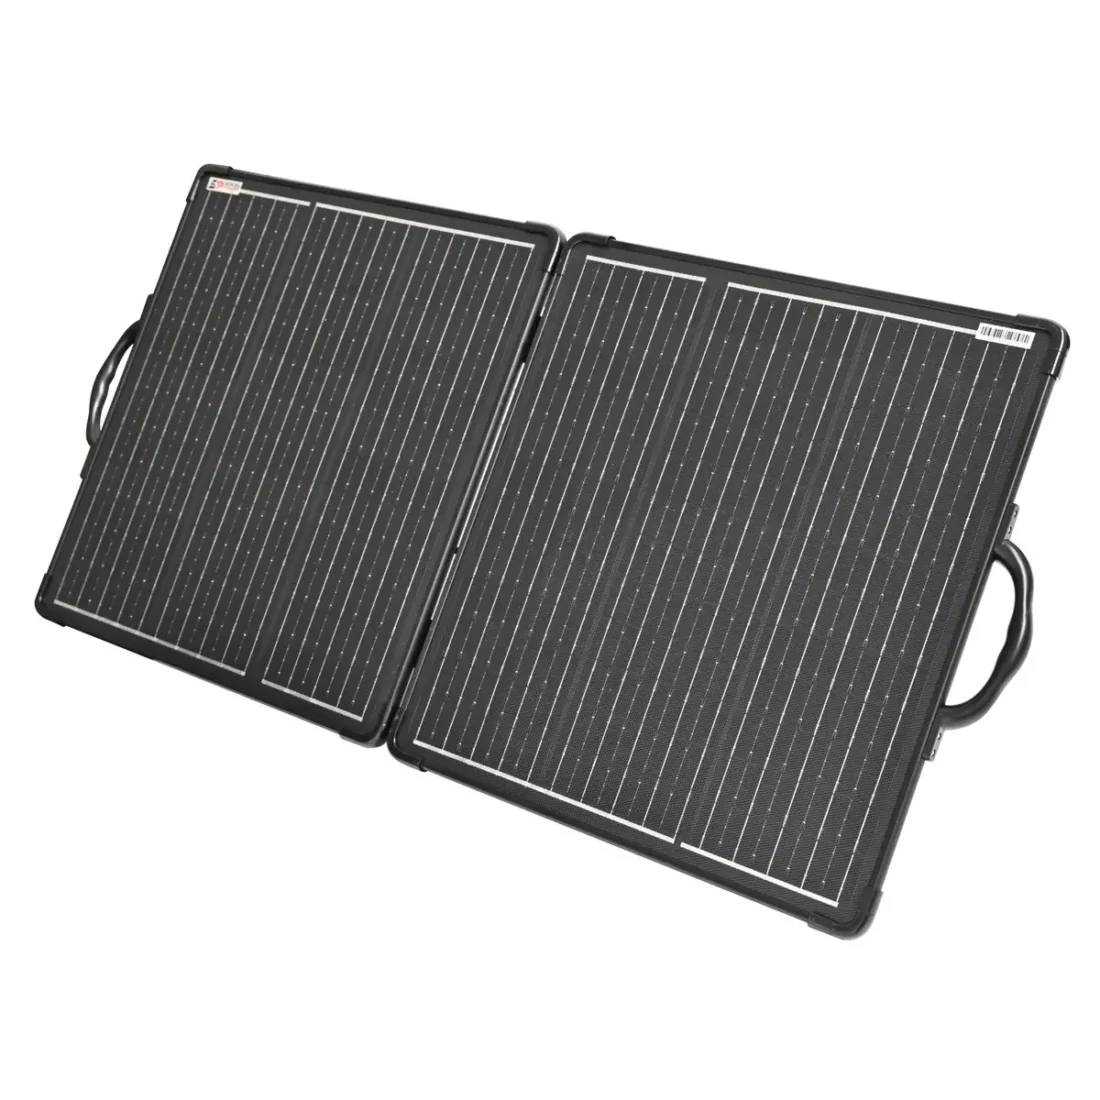 Excel Power 100W Portable Folding Solar Panel